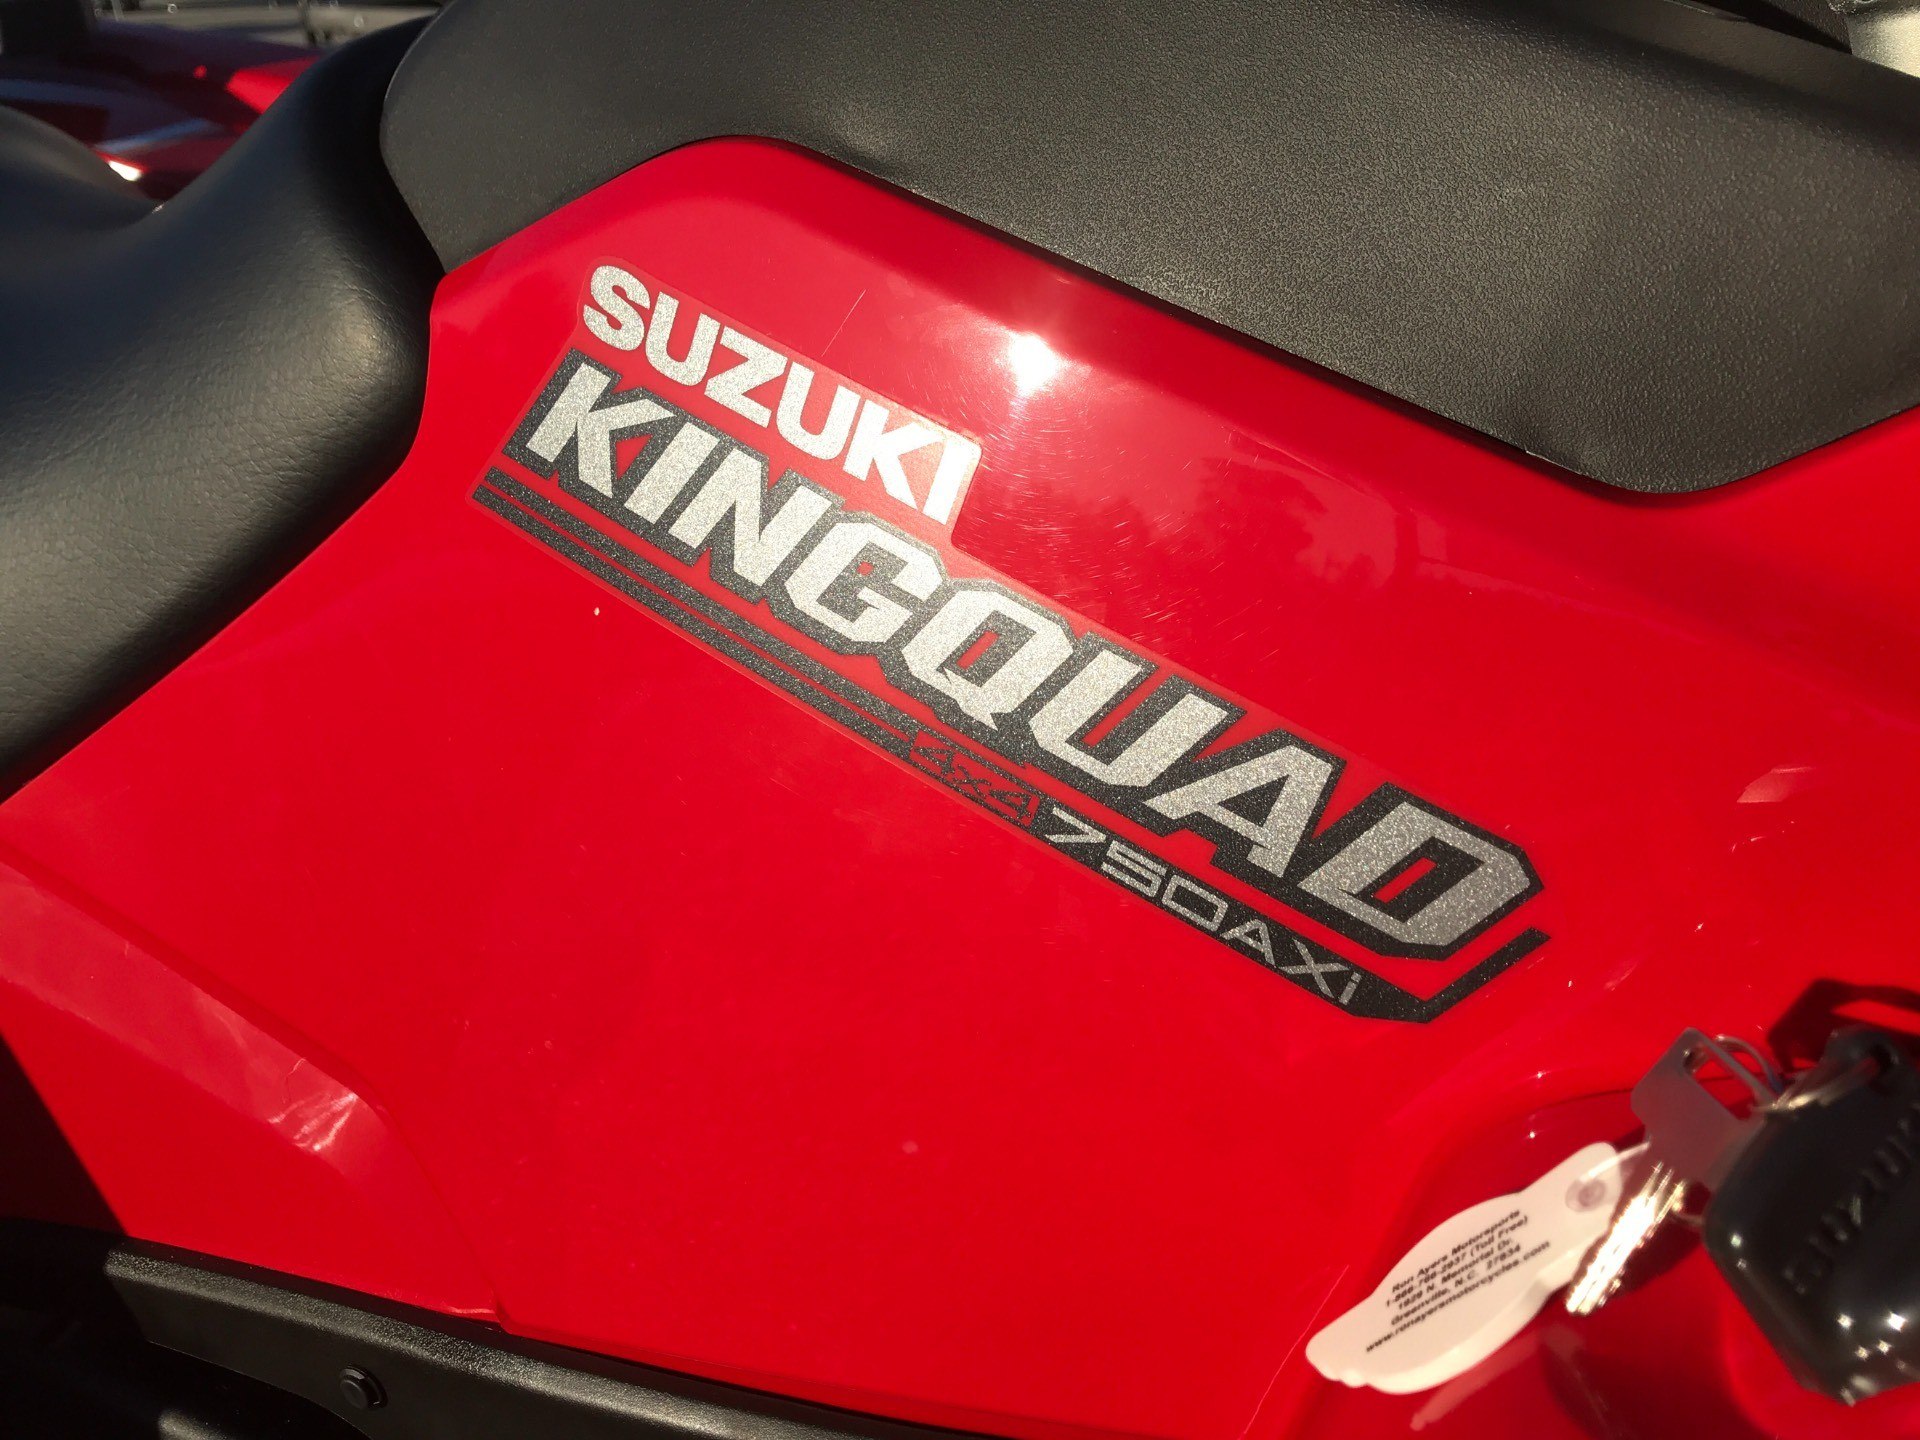 2021 Suzuki KingQuad 750AXi Power Steering in Greenville, North Carolina - Photo 11